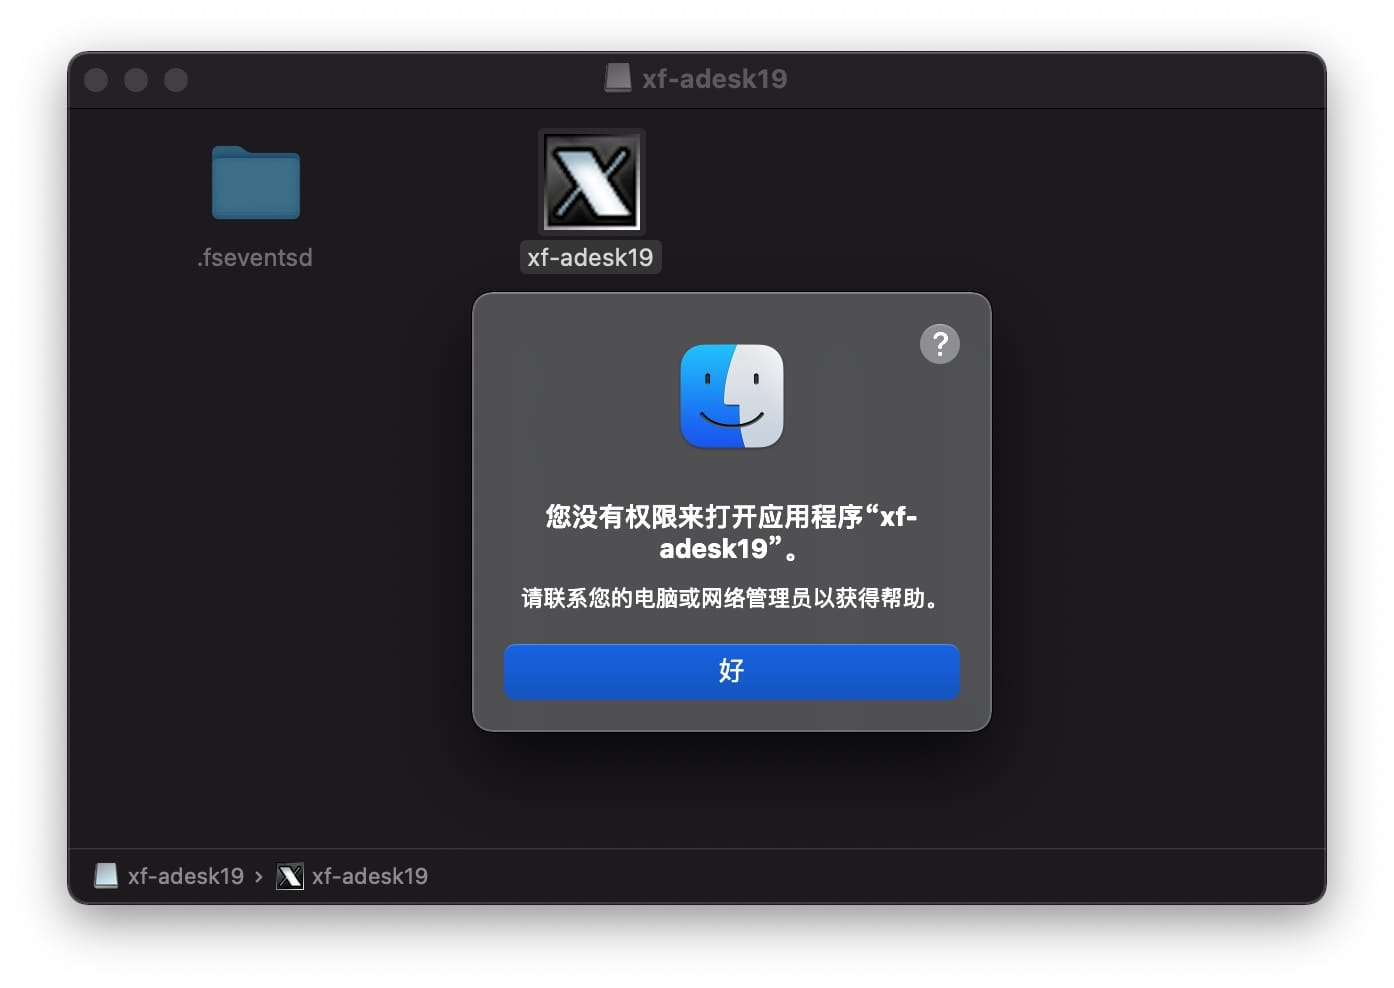 AutoCAD 2022 for Mac 中文版破解教程 Mac教程 第7张